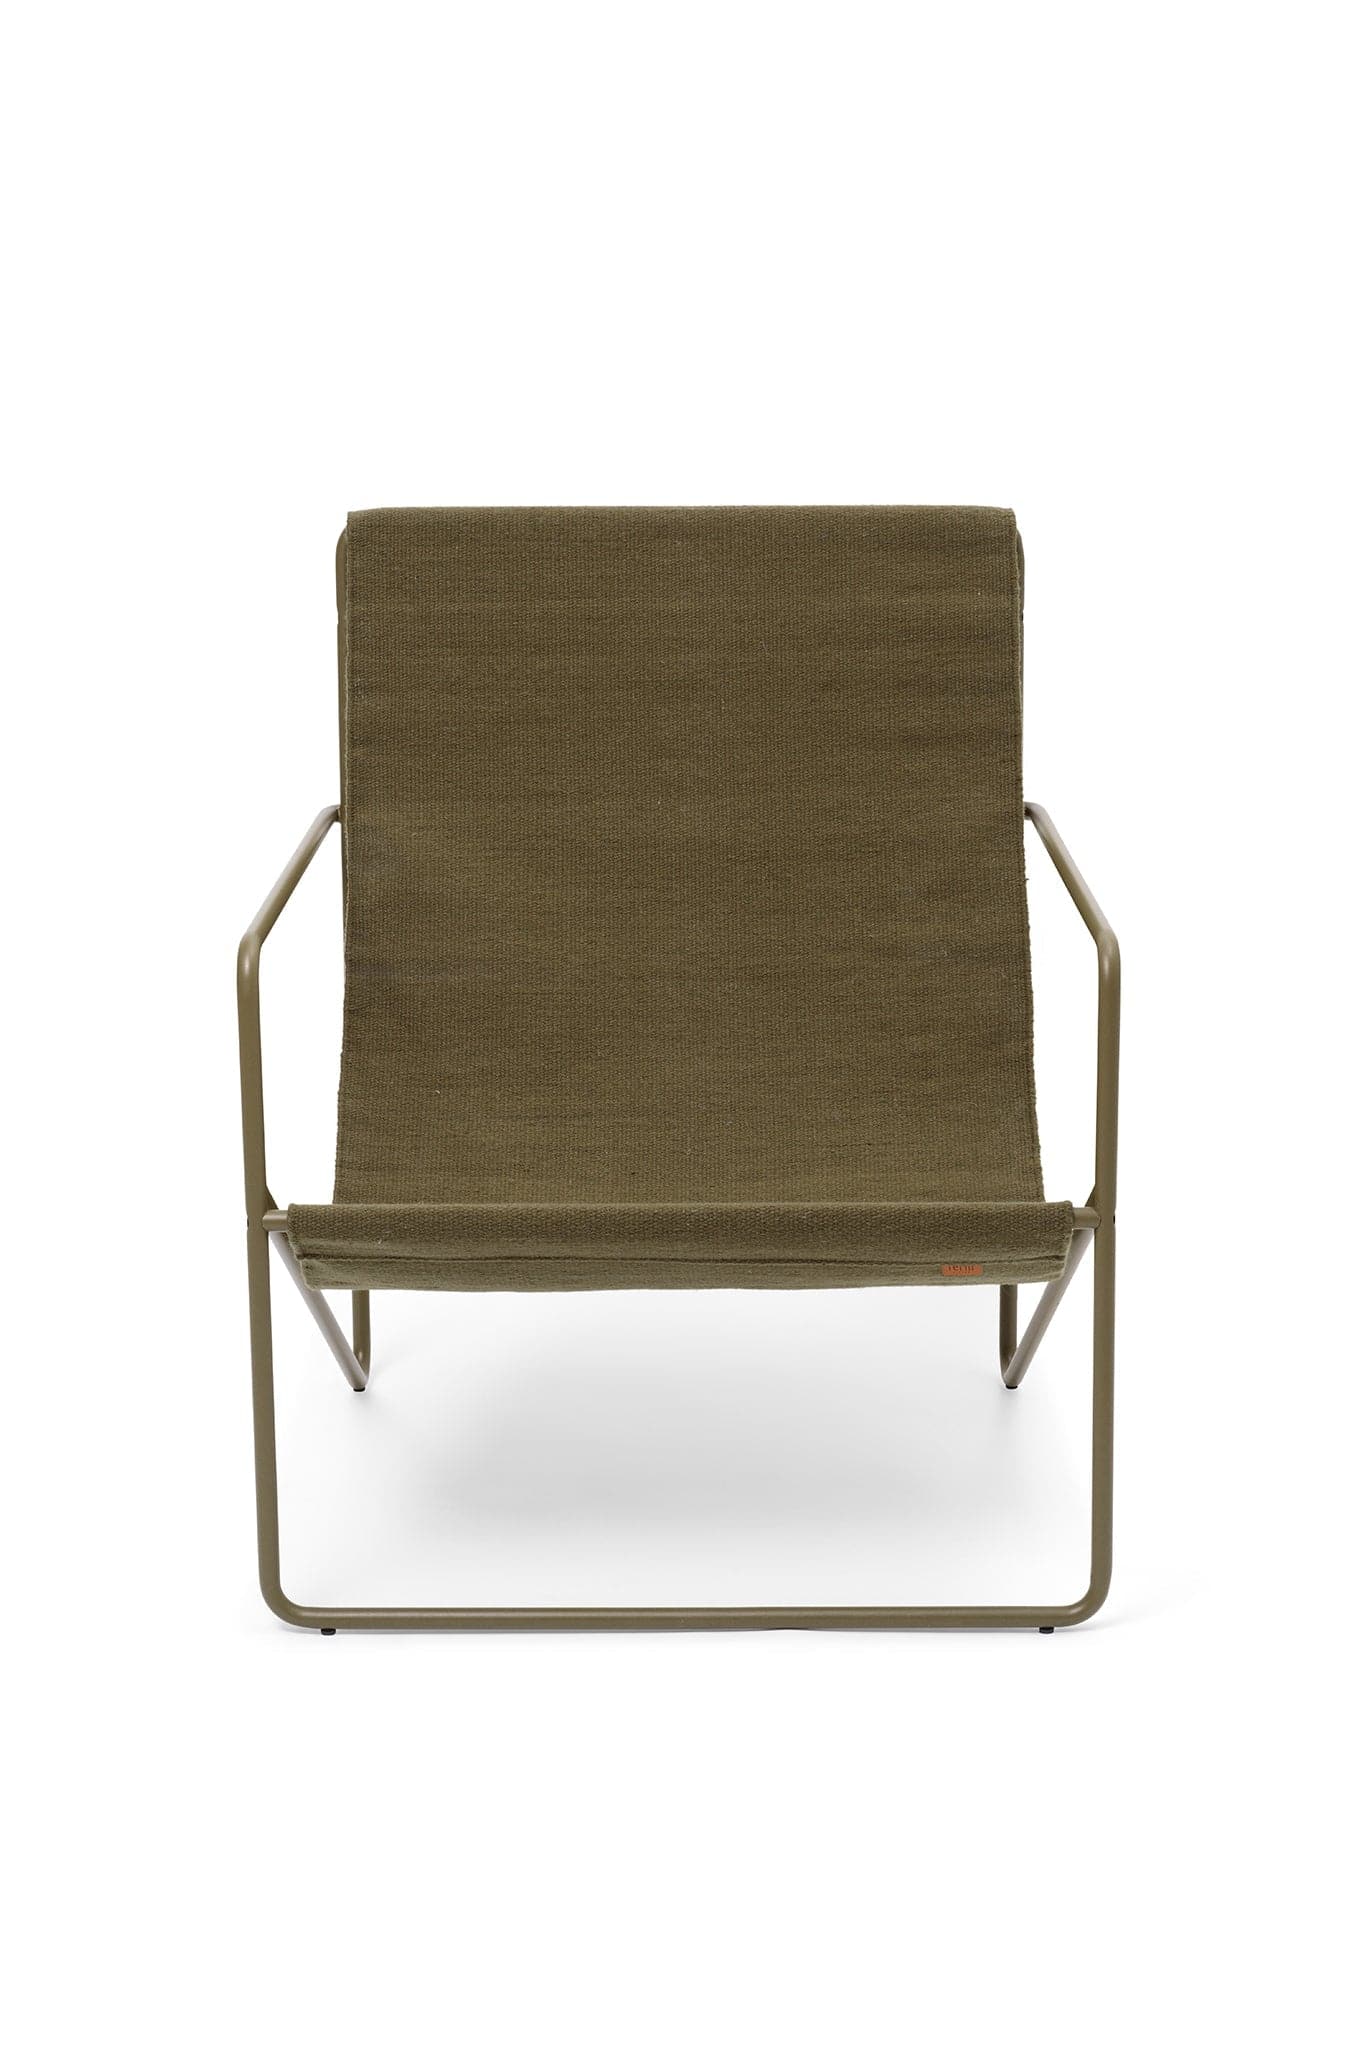 Ferm Living Desert Lounge Chair - Olive - Marz DesignsFerm Living